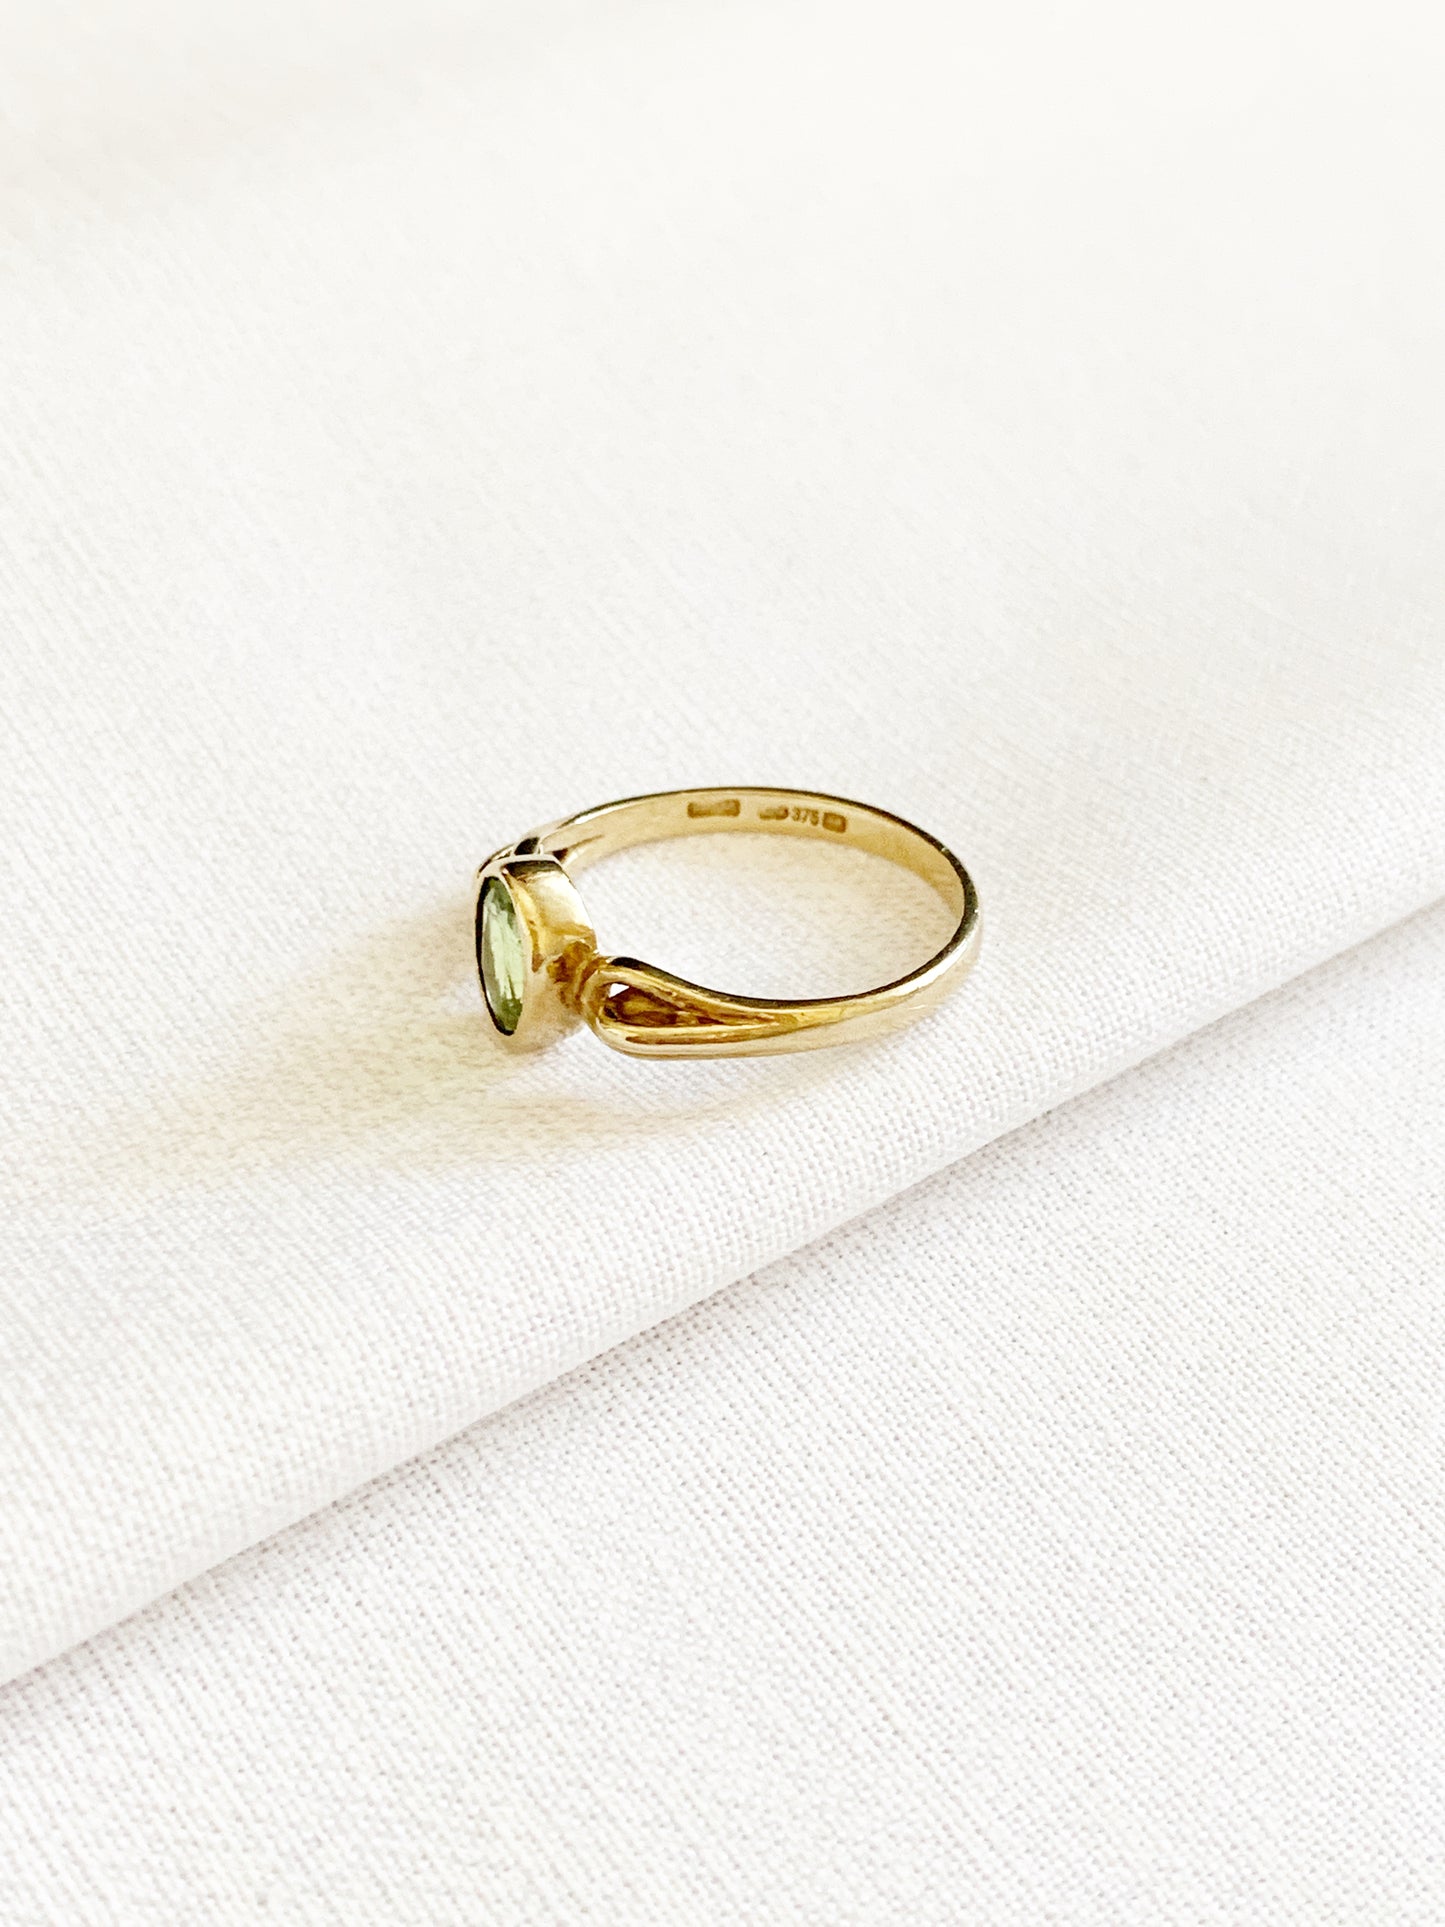 Vintage 9ct Gold Peridot Ring